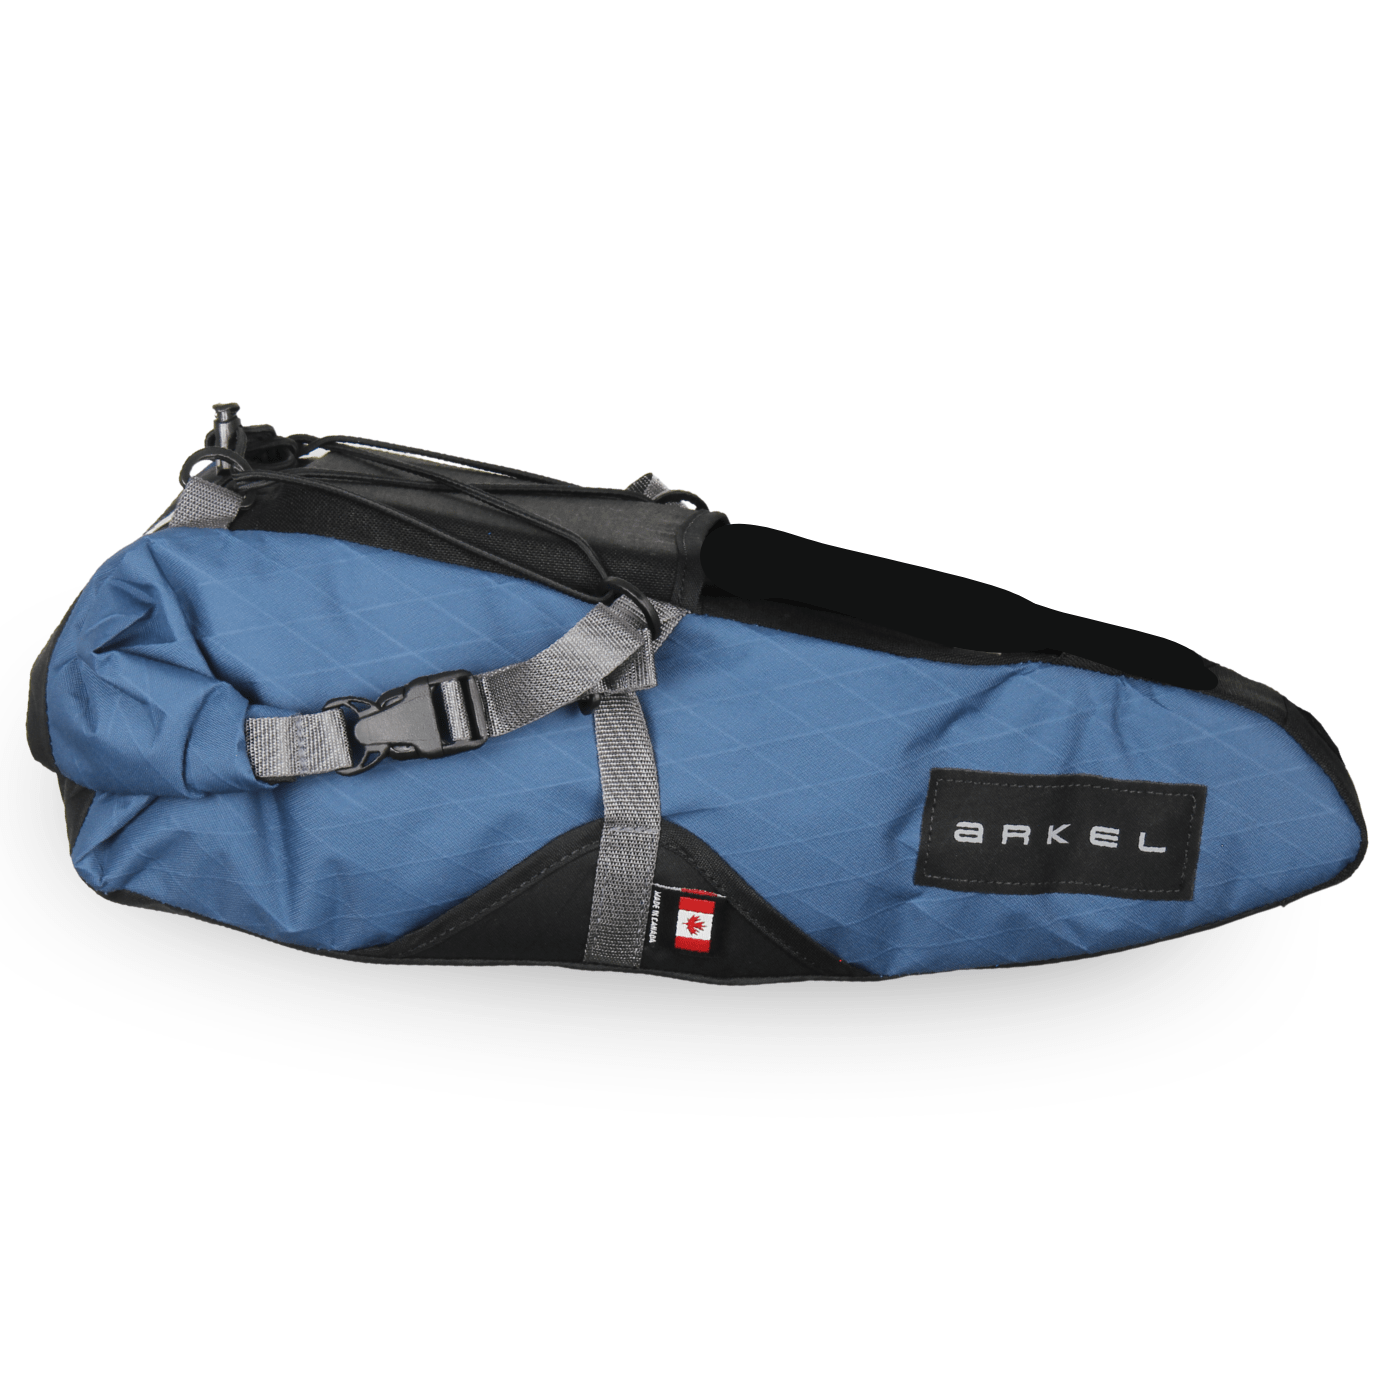 Arkel Bike Bags Large (15 L) / XPac Ocean Blue Seatpacker Bag - WITHOUT Hanger